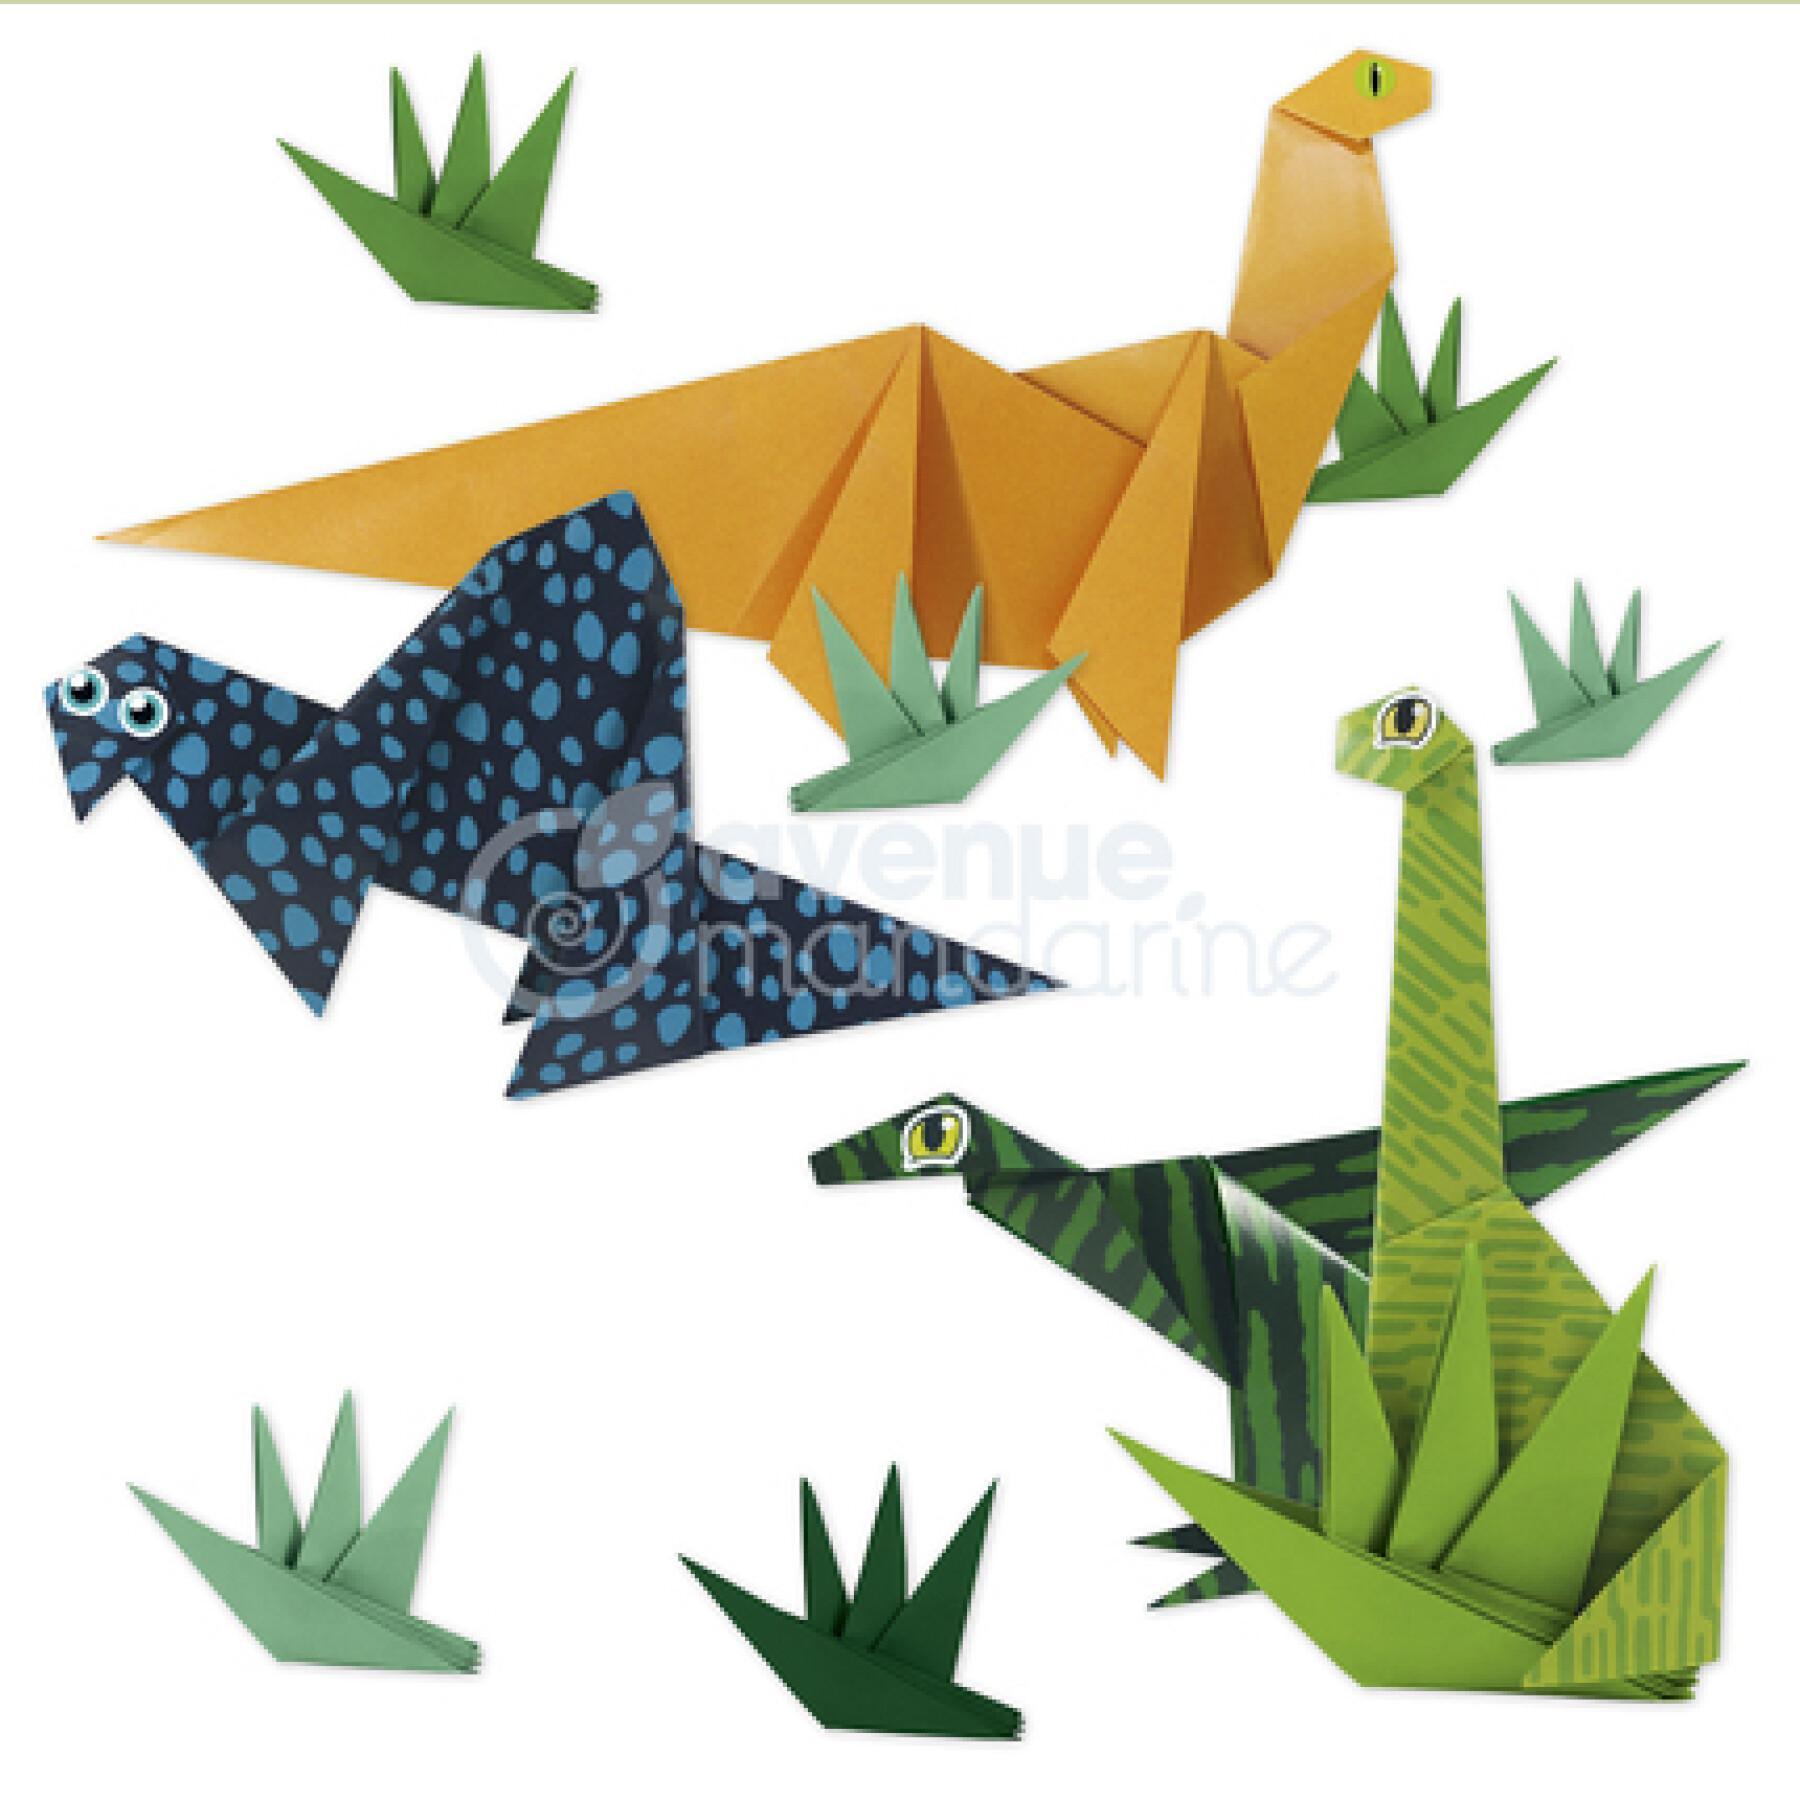 Kreativschachtel - Origami Dino Avenue Mandarine